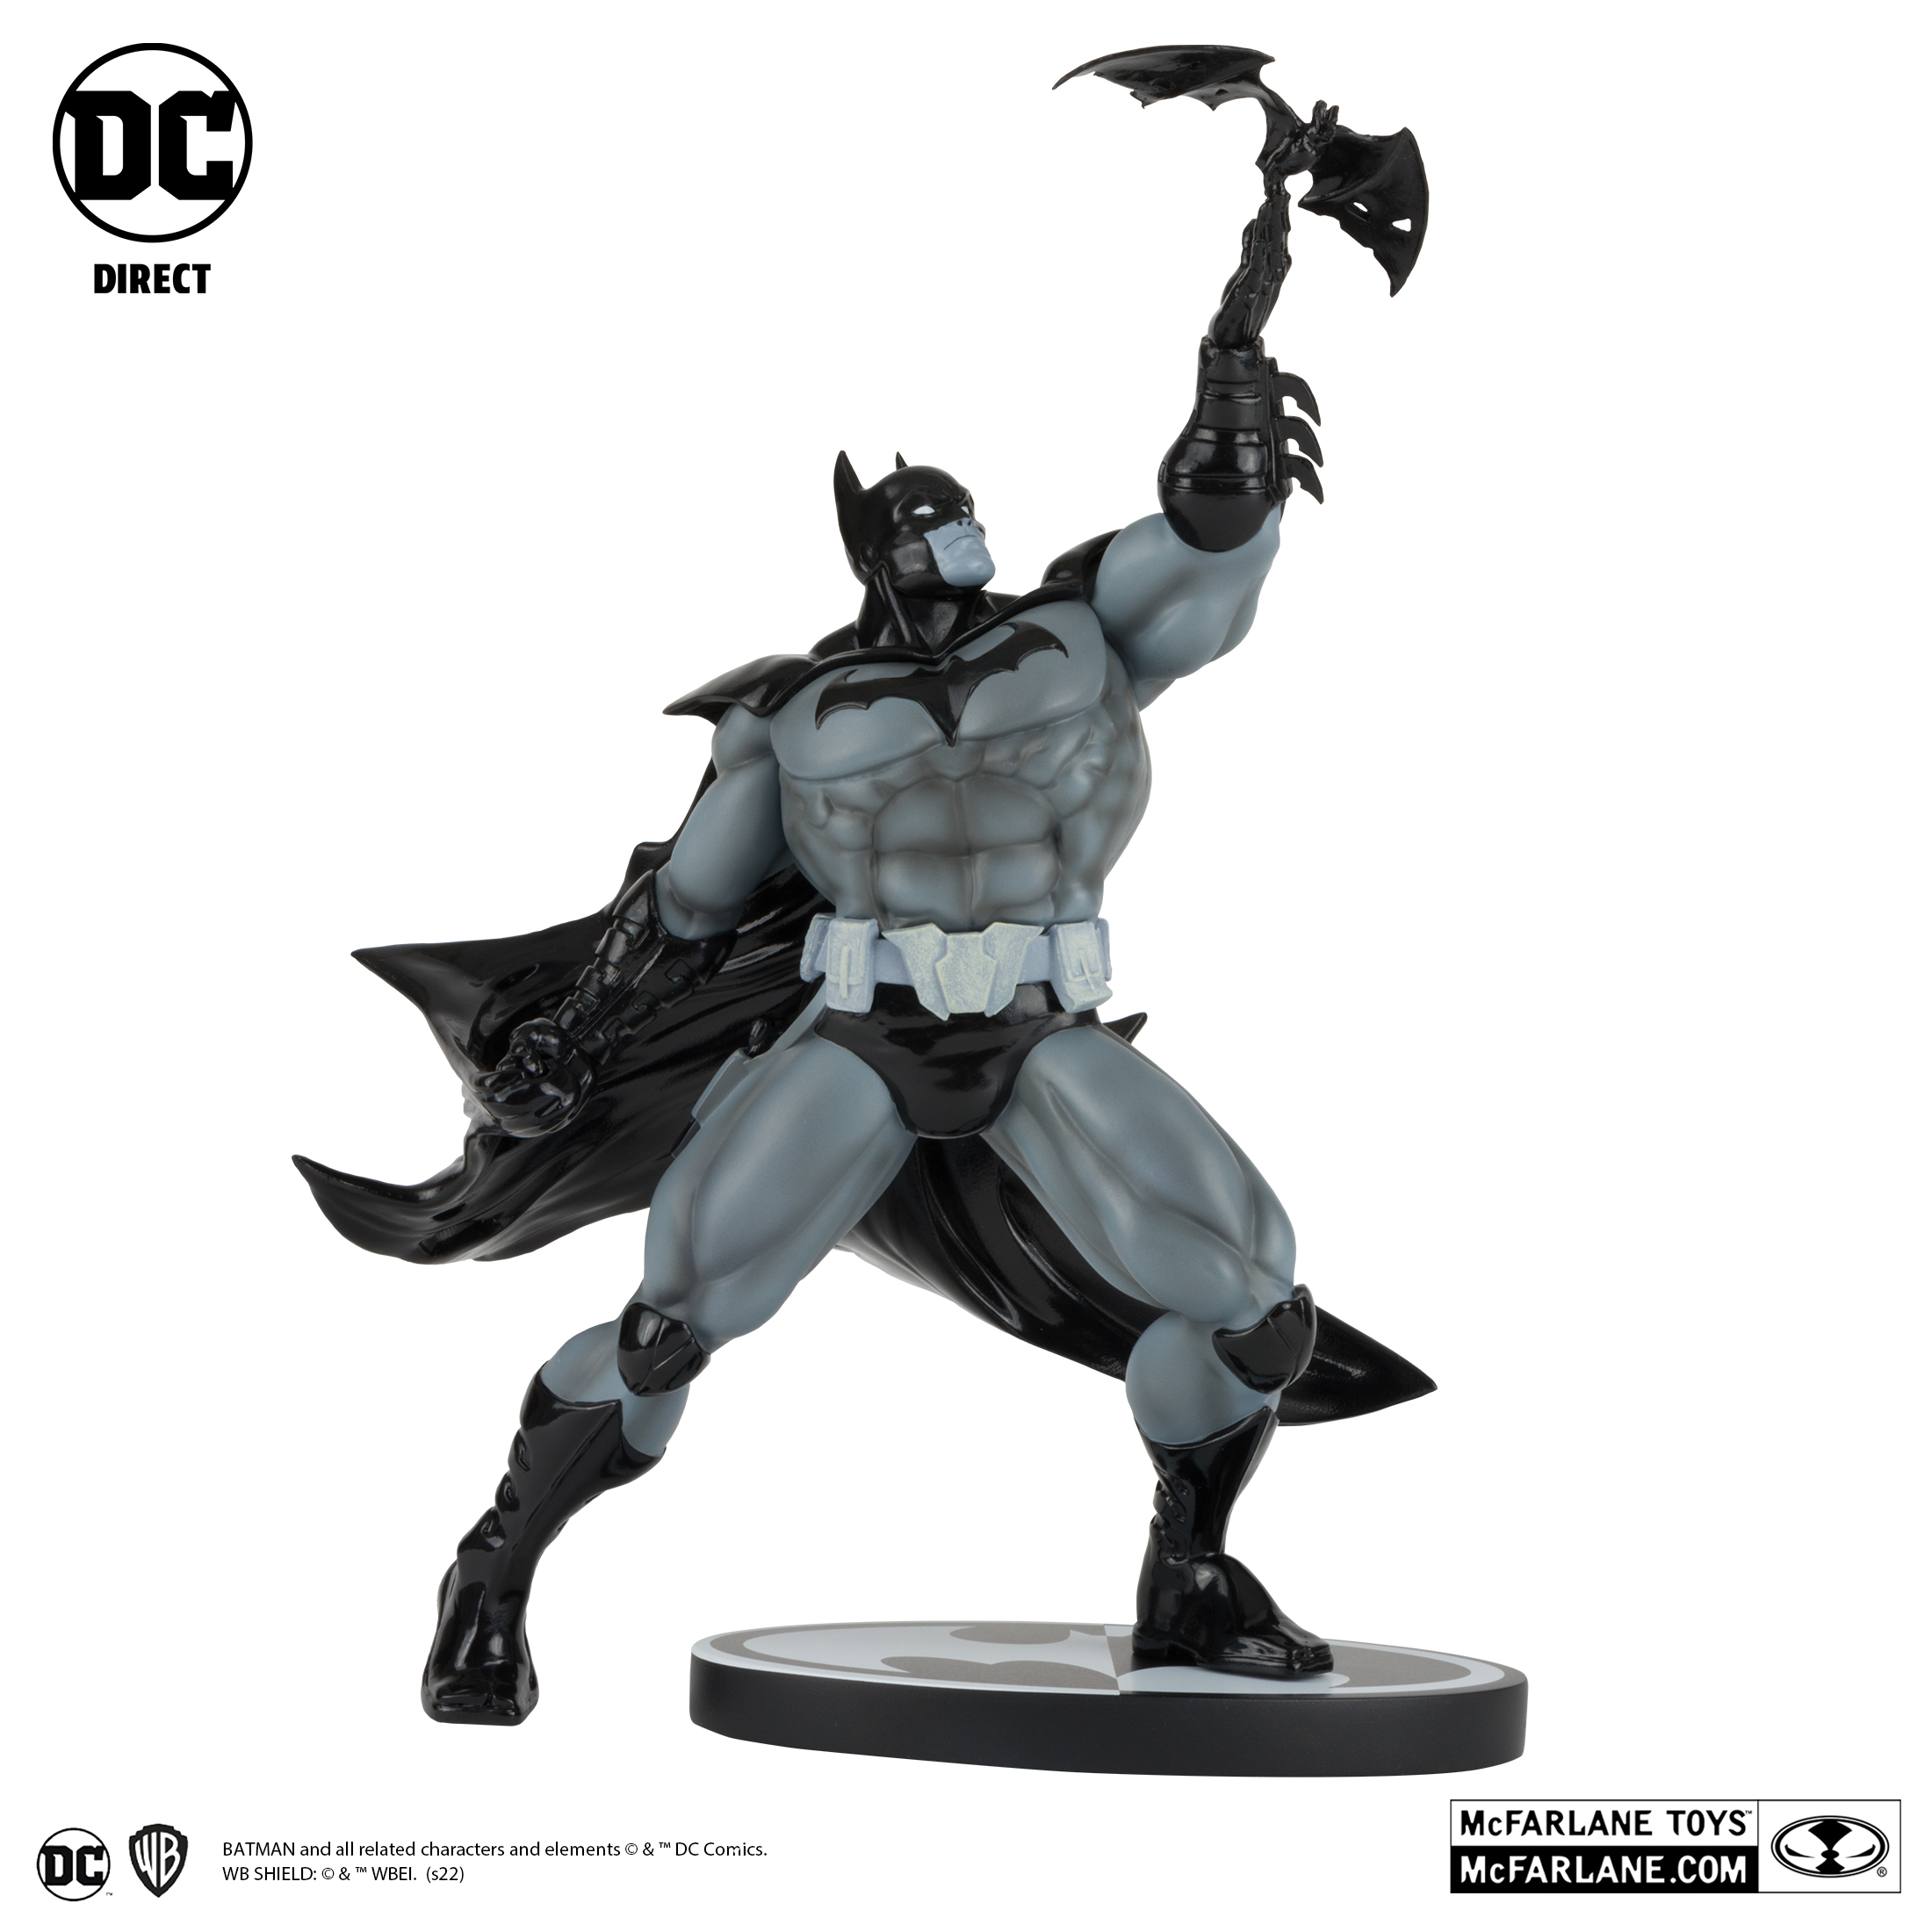 McFarlane Toys DC Direct Batman: Black and White by Freddie Williams II Statue